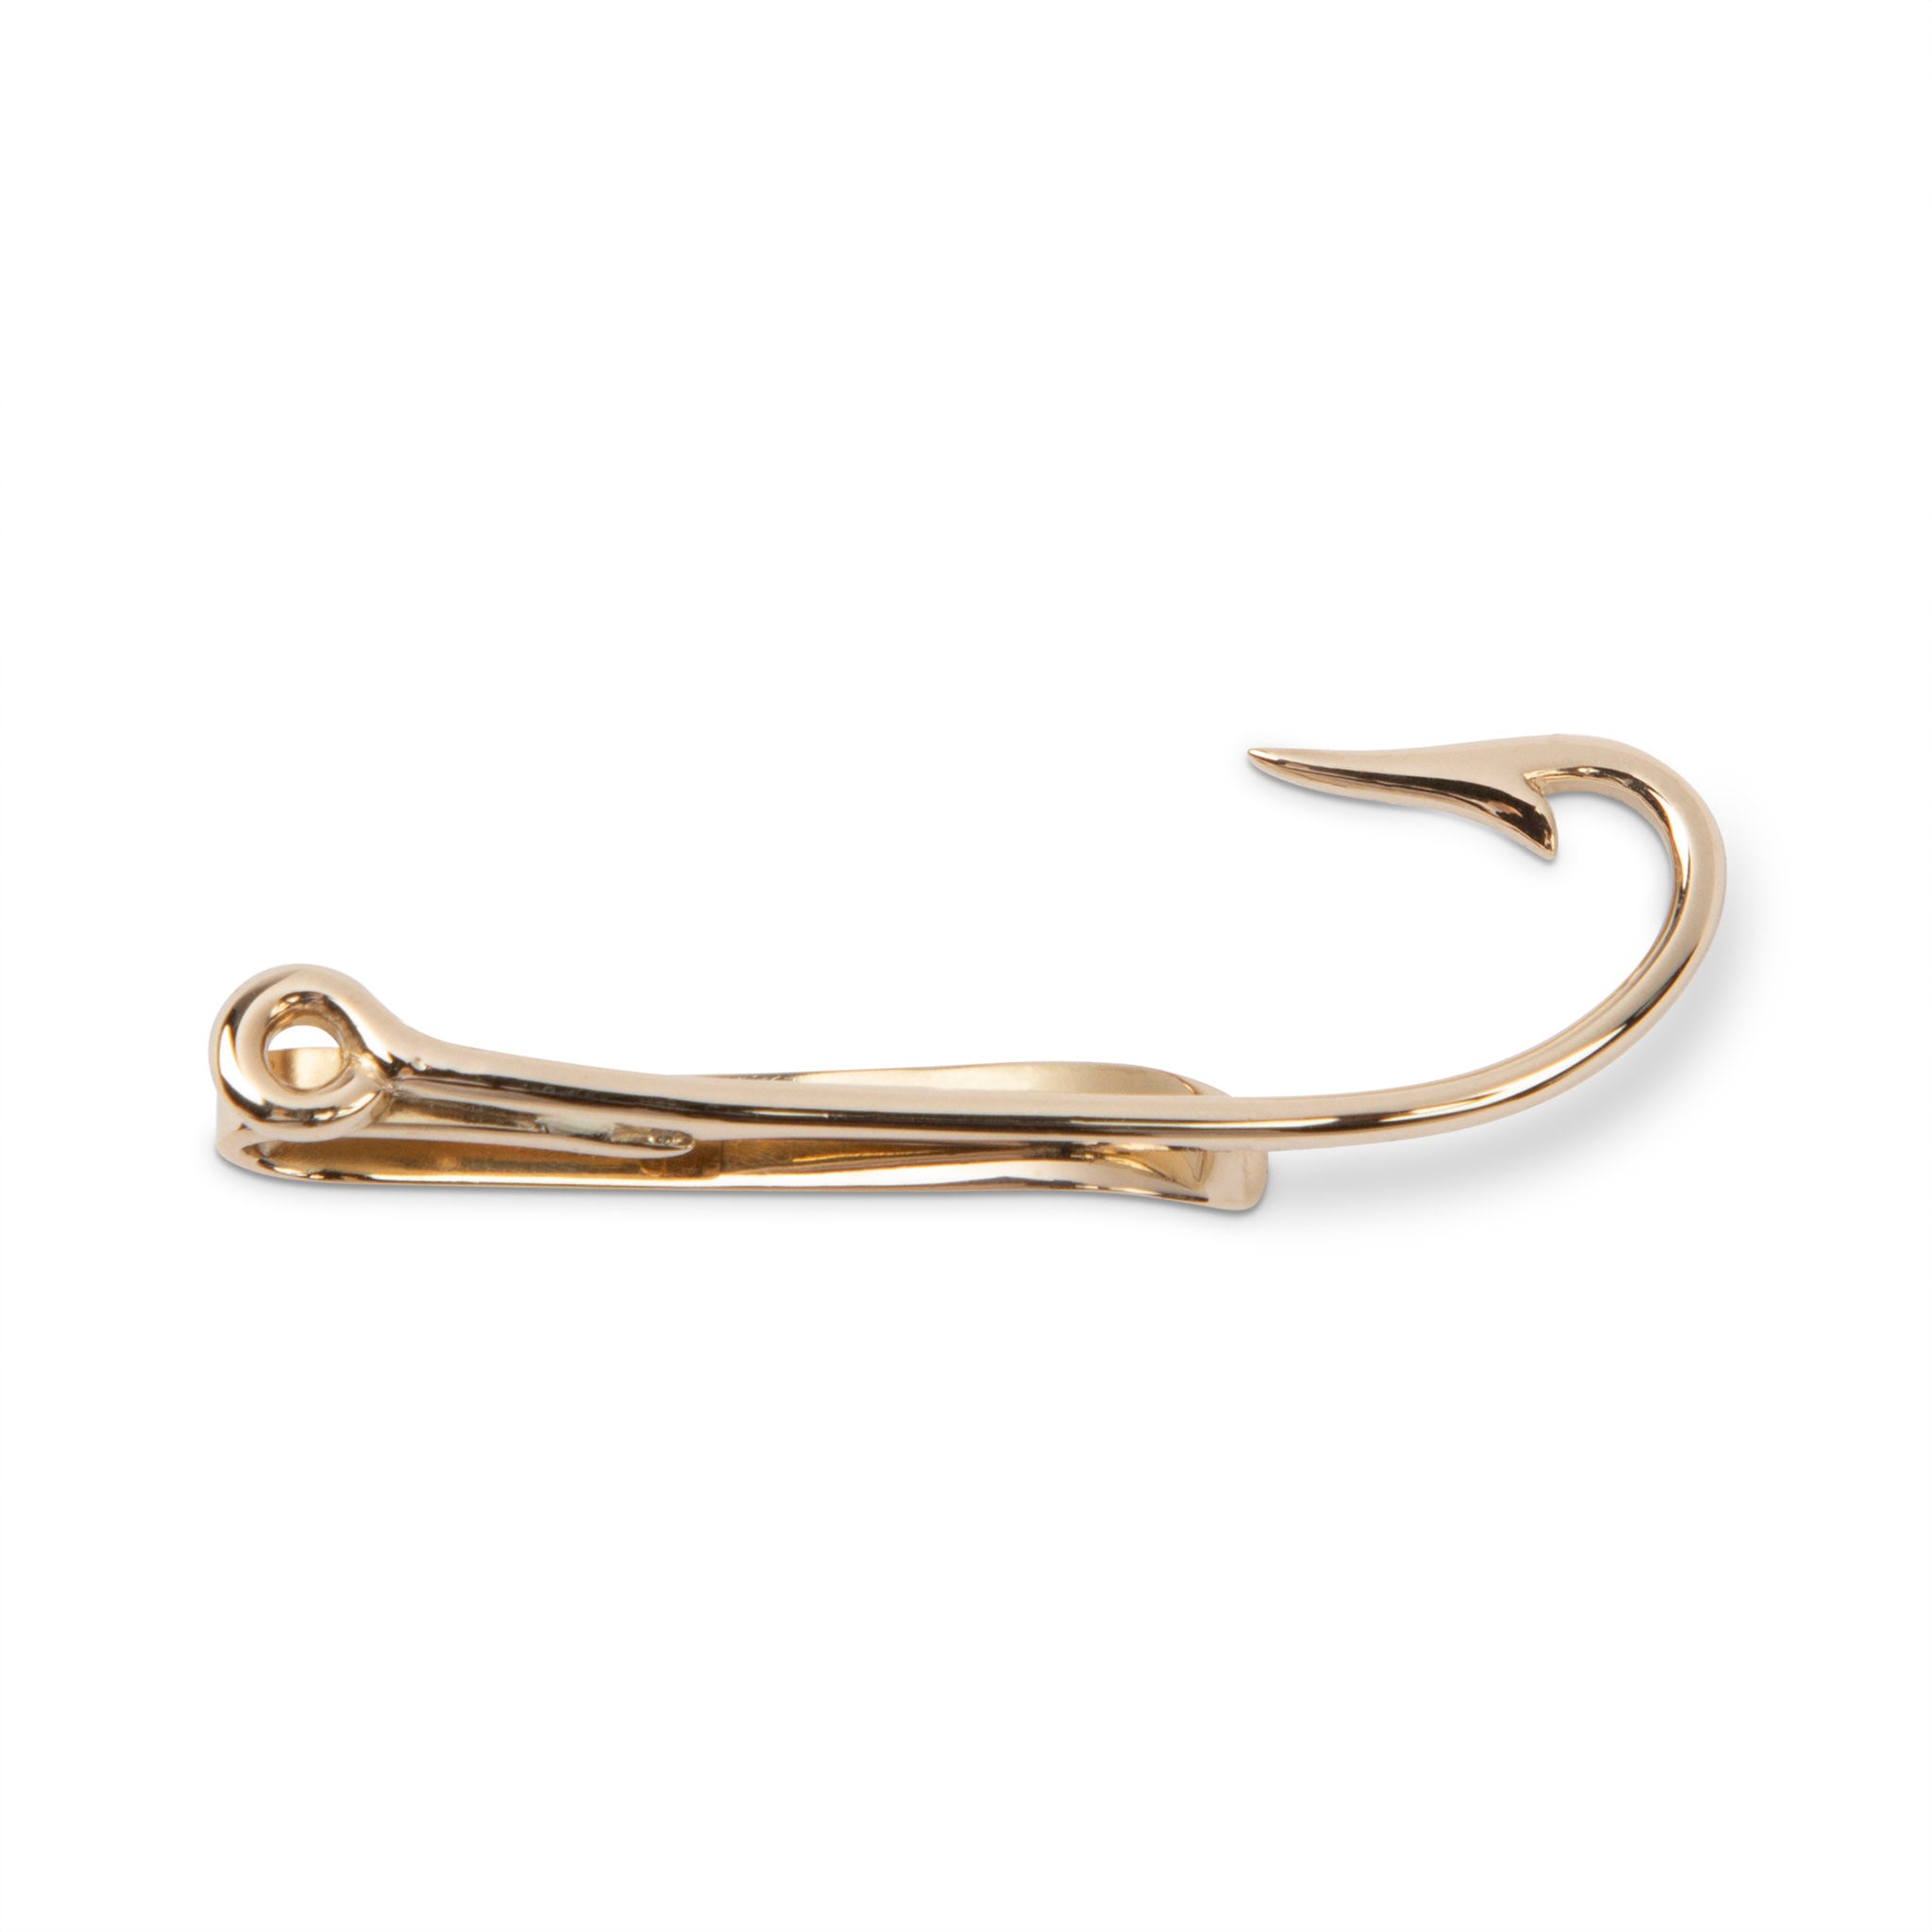 Vintage Tiffany & Co. 14k Gold Fish Hook Tie Clip